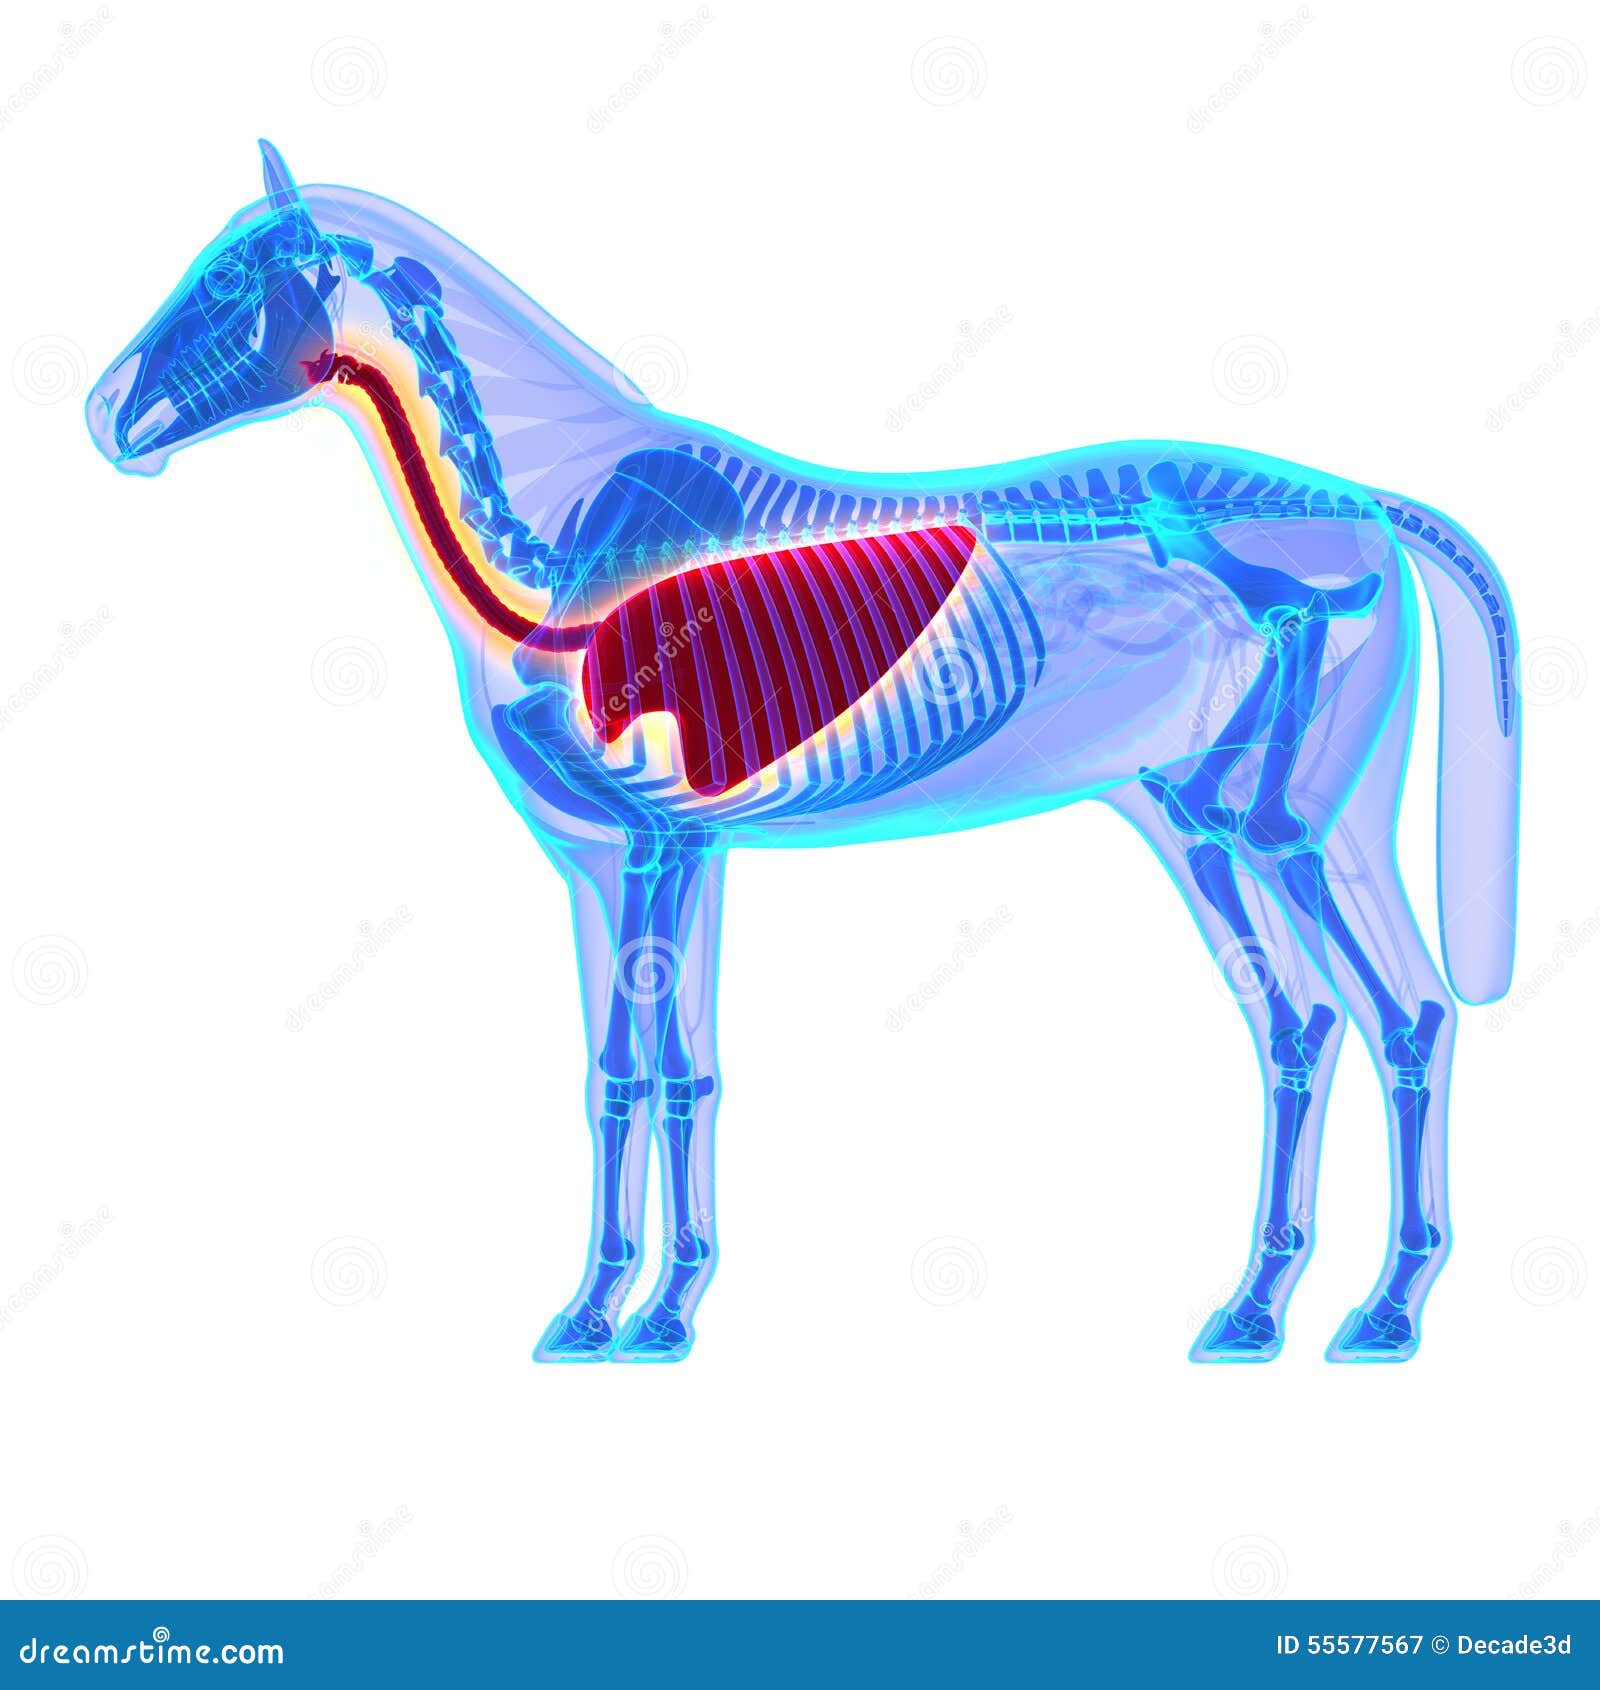 horse thorax - horse equus anatomy -  on white